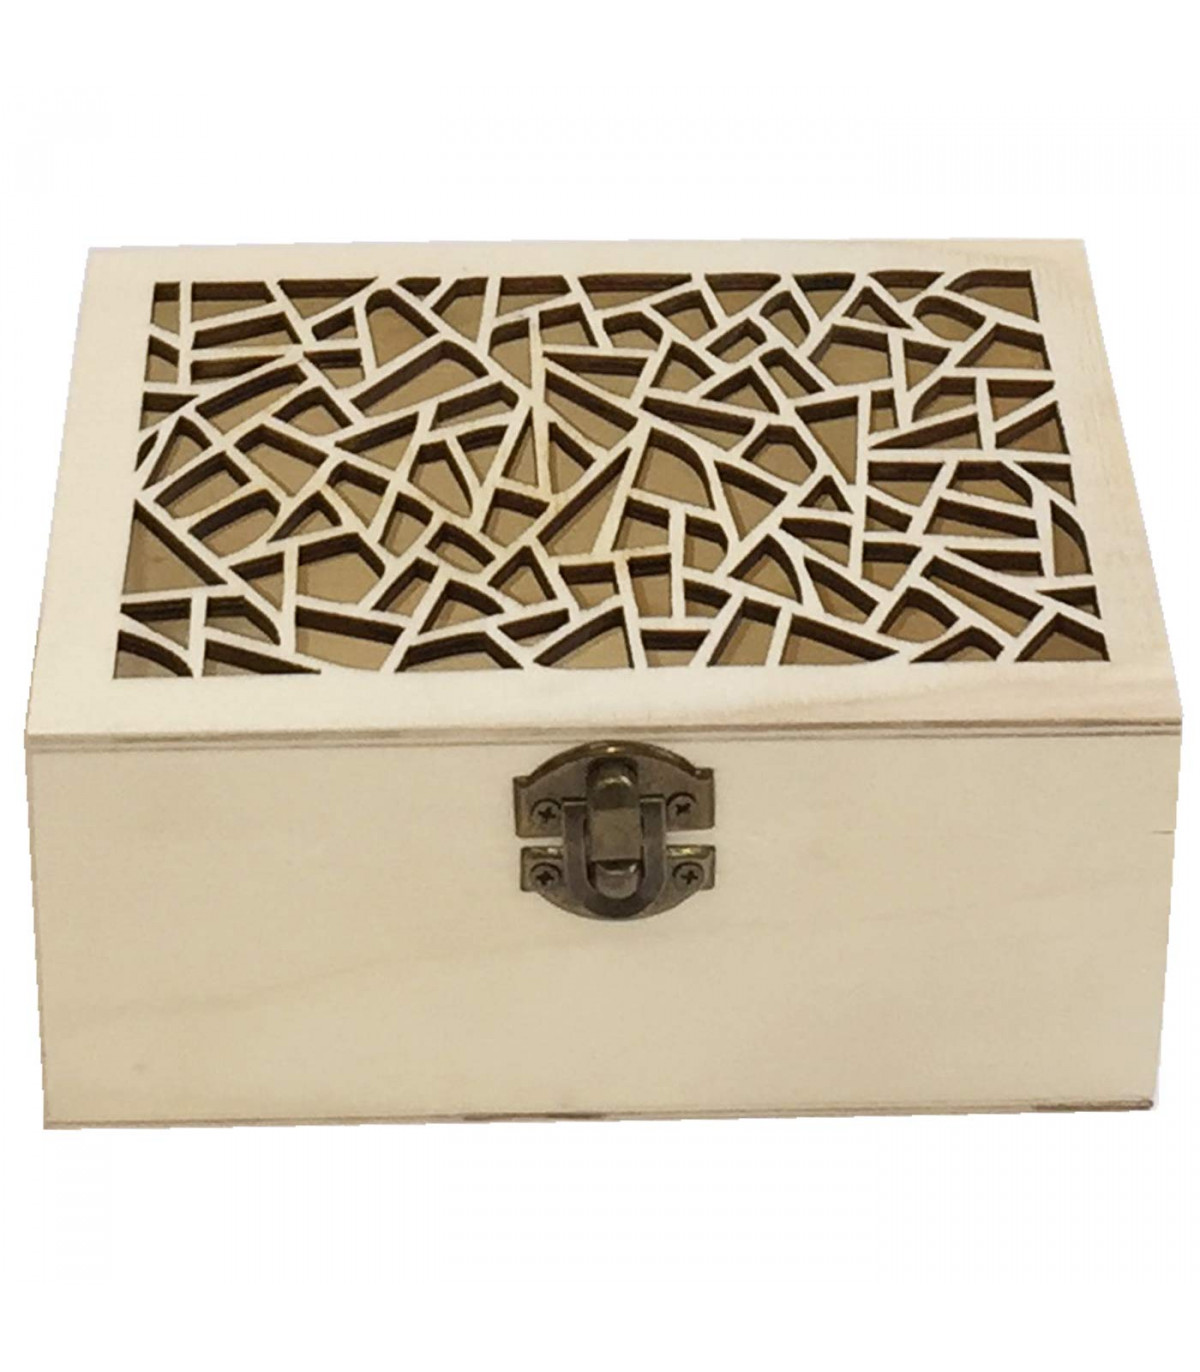 Caja de madera con tapa redondeada, madera natural, cierre metálico,  almacenaje joyas, manualidades, decoración, 6 x